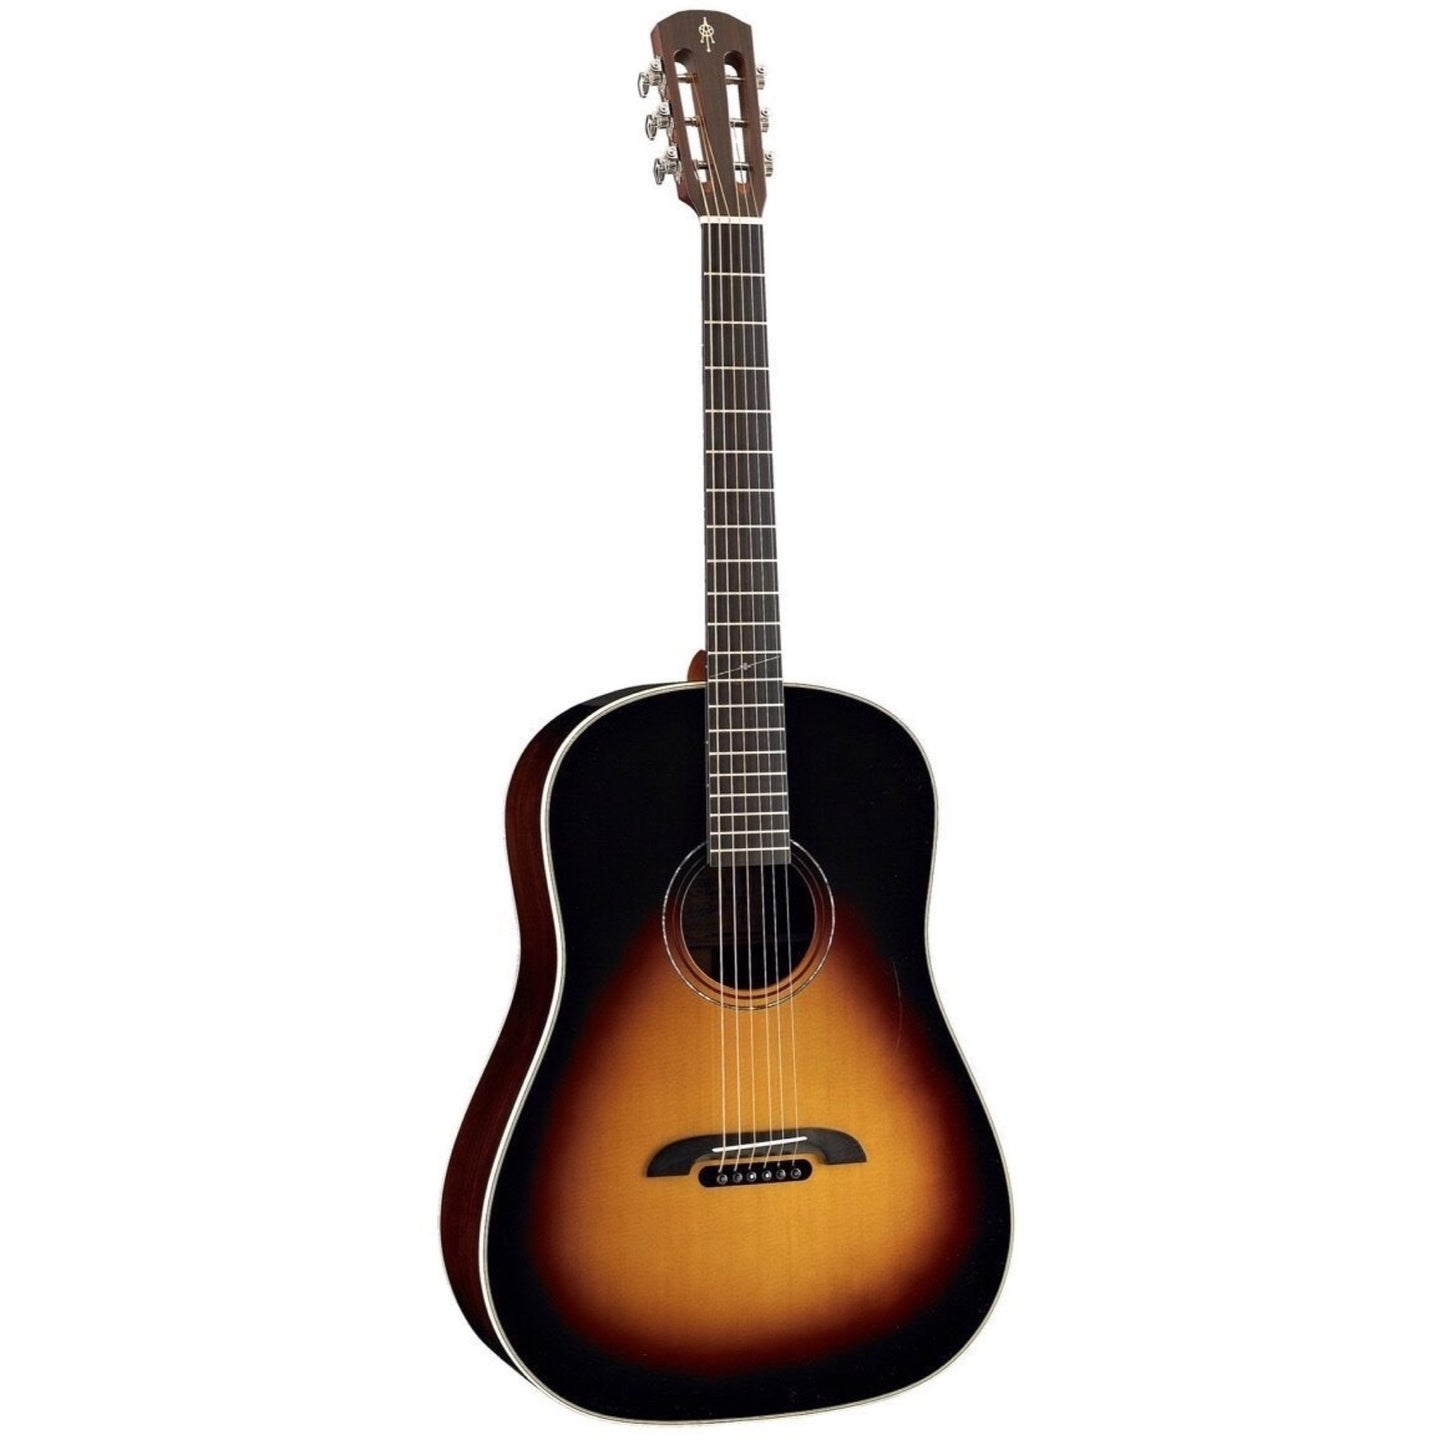 Alvarez Yairi DYMR70 Masterworks Dreadnought Acoustic Guitar (with Case), Sunburst